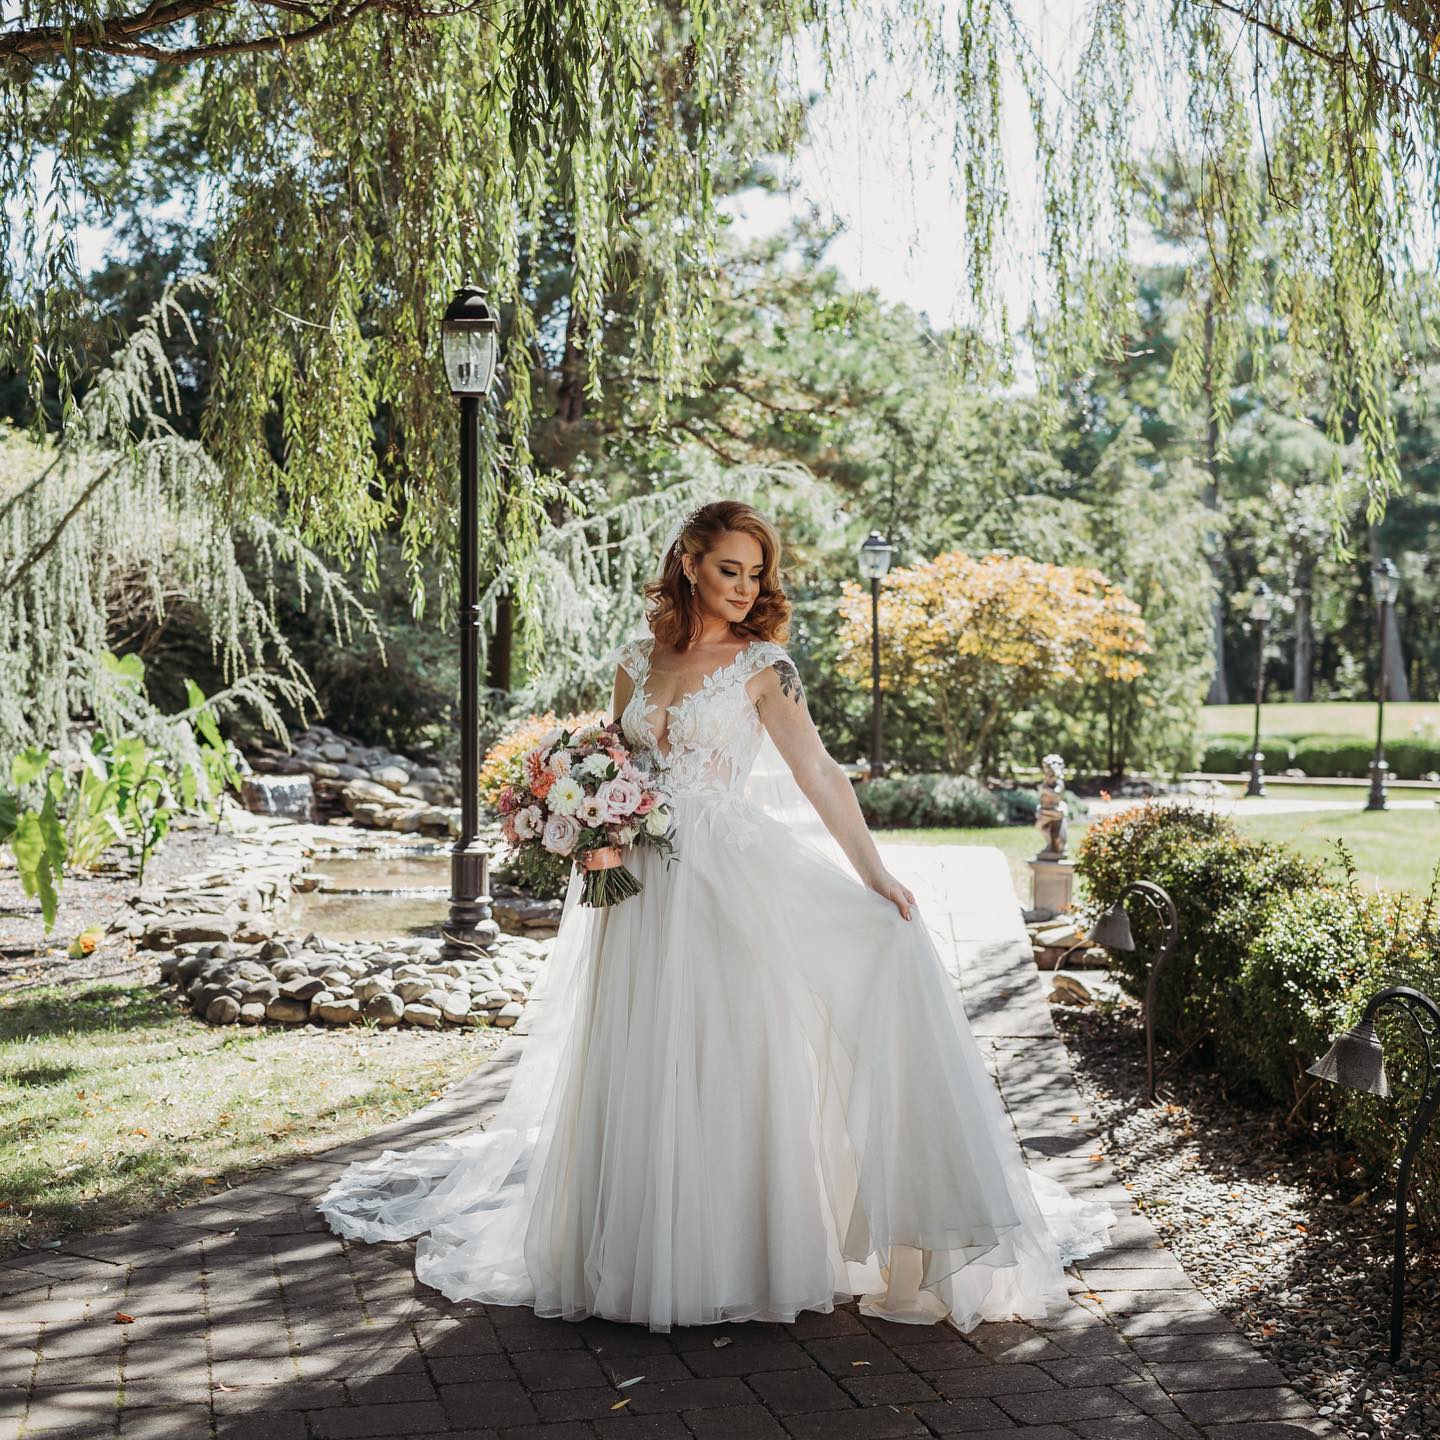 Illusion Cap Sleeve Lace Appliqued Wedding Dress - bride smiling 